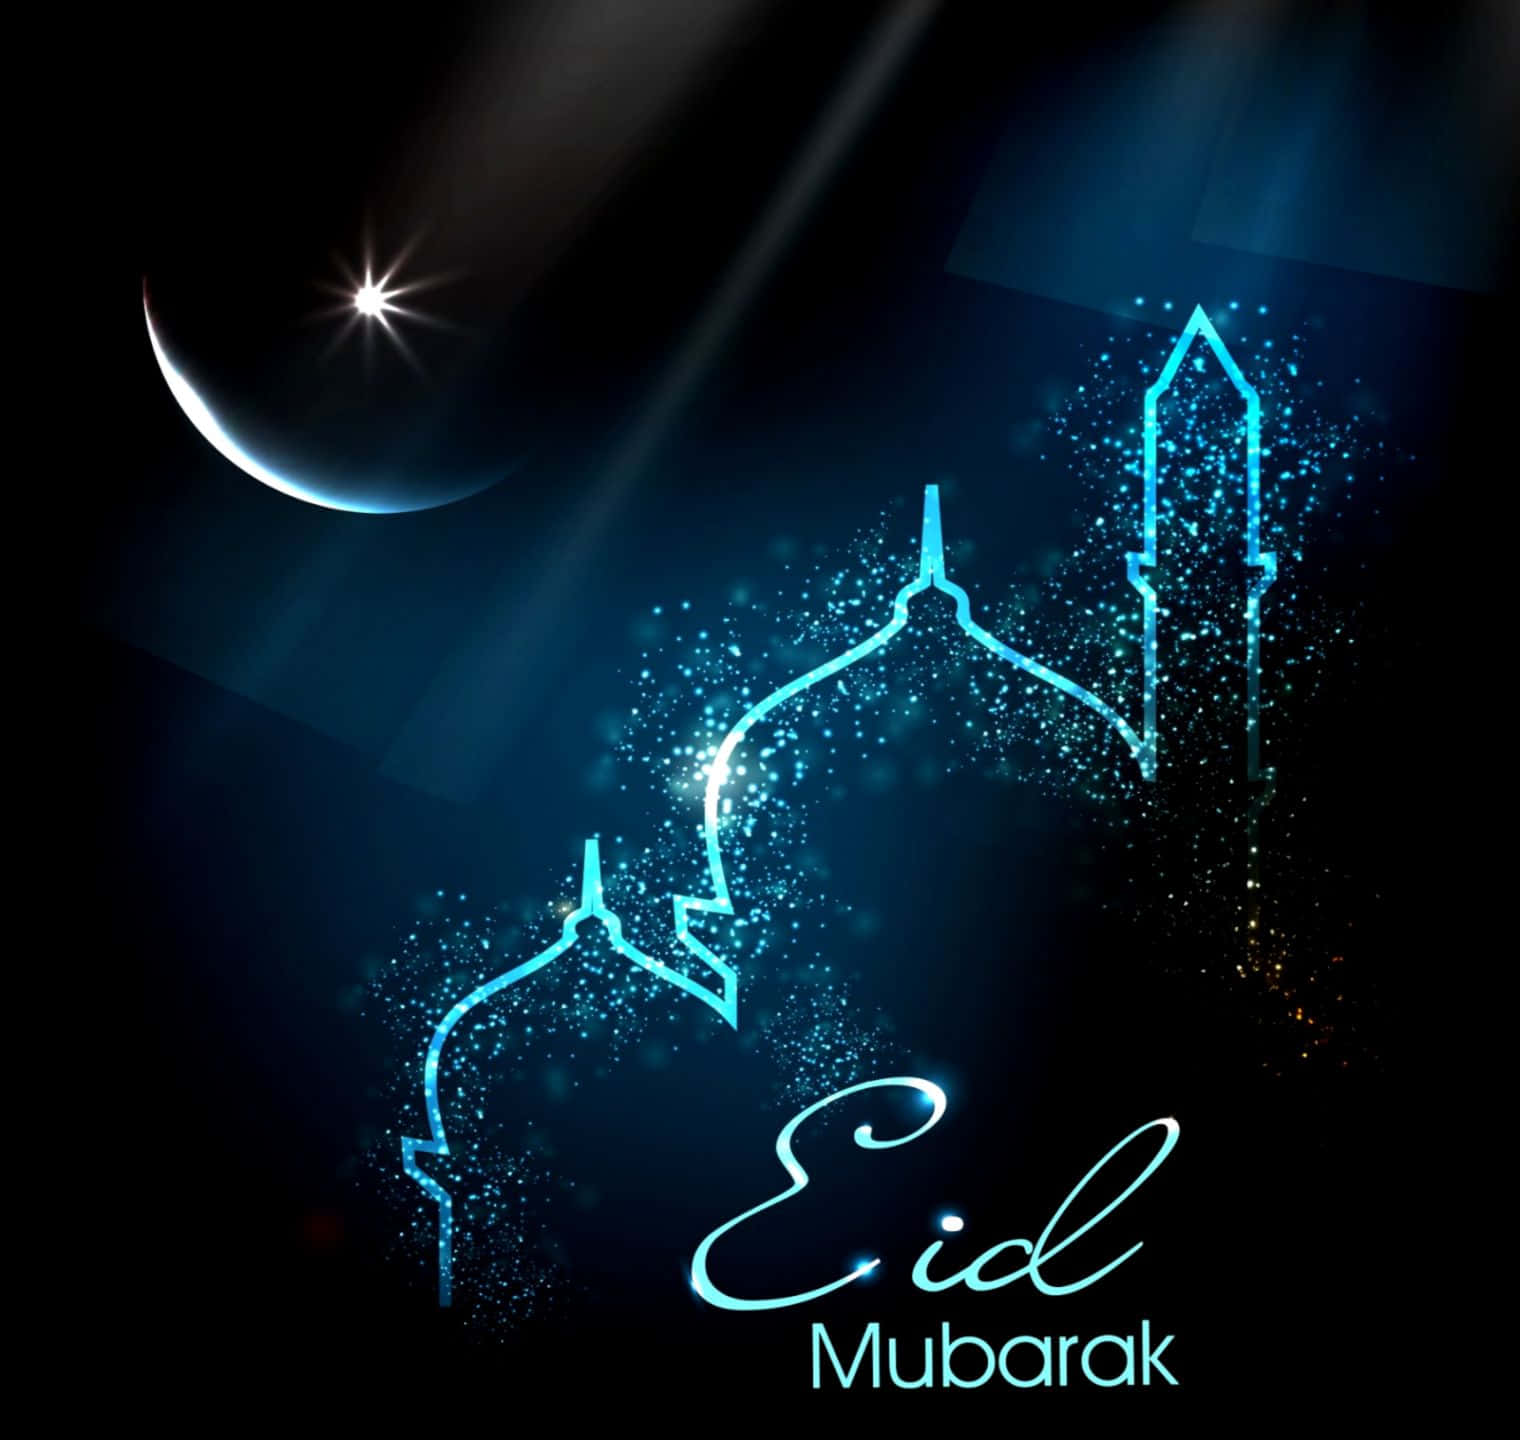 "The blessing of Eid Mubarak lives on!"